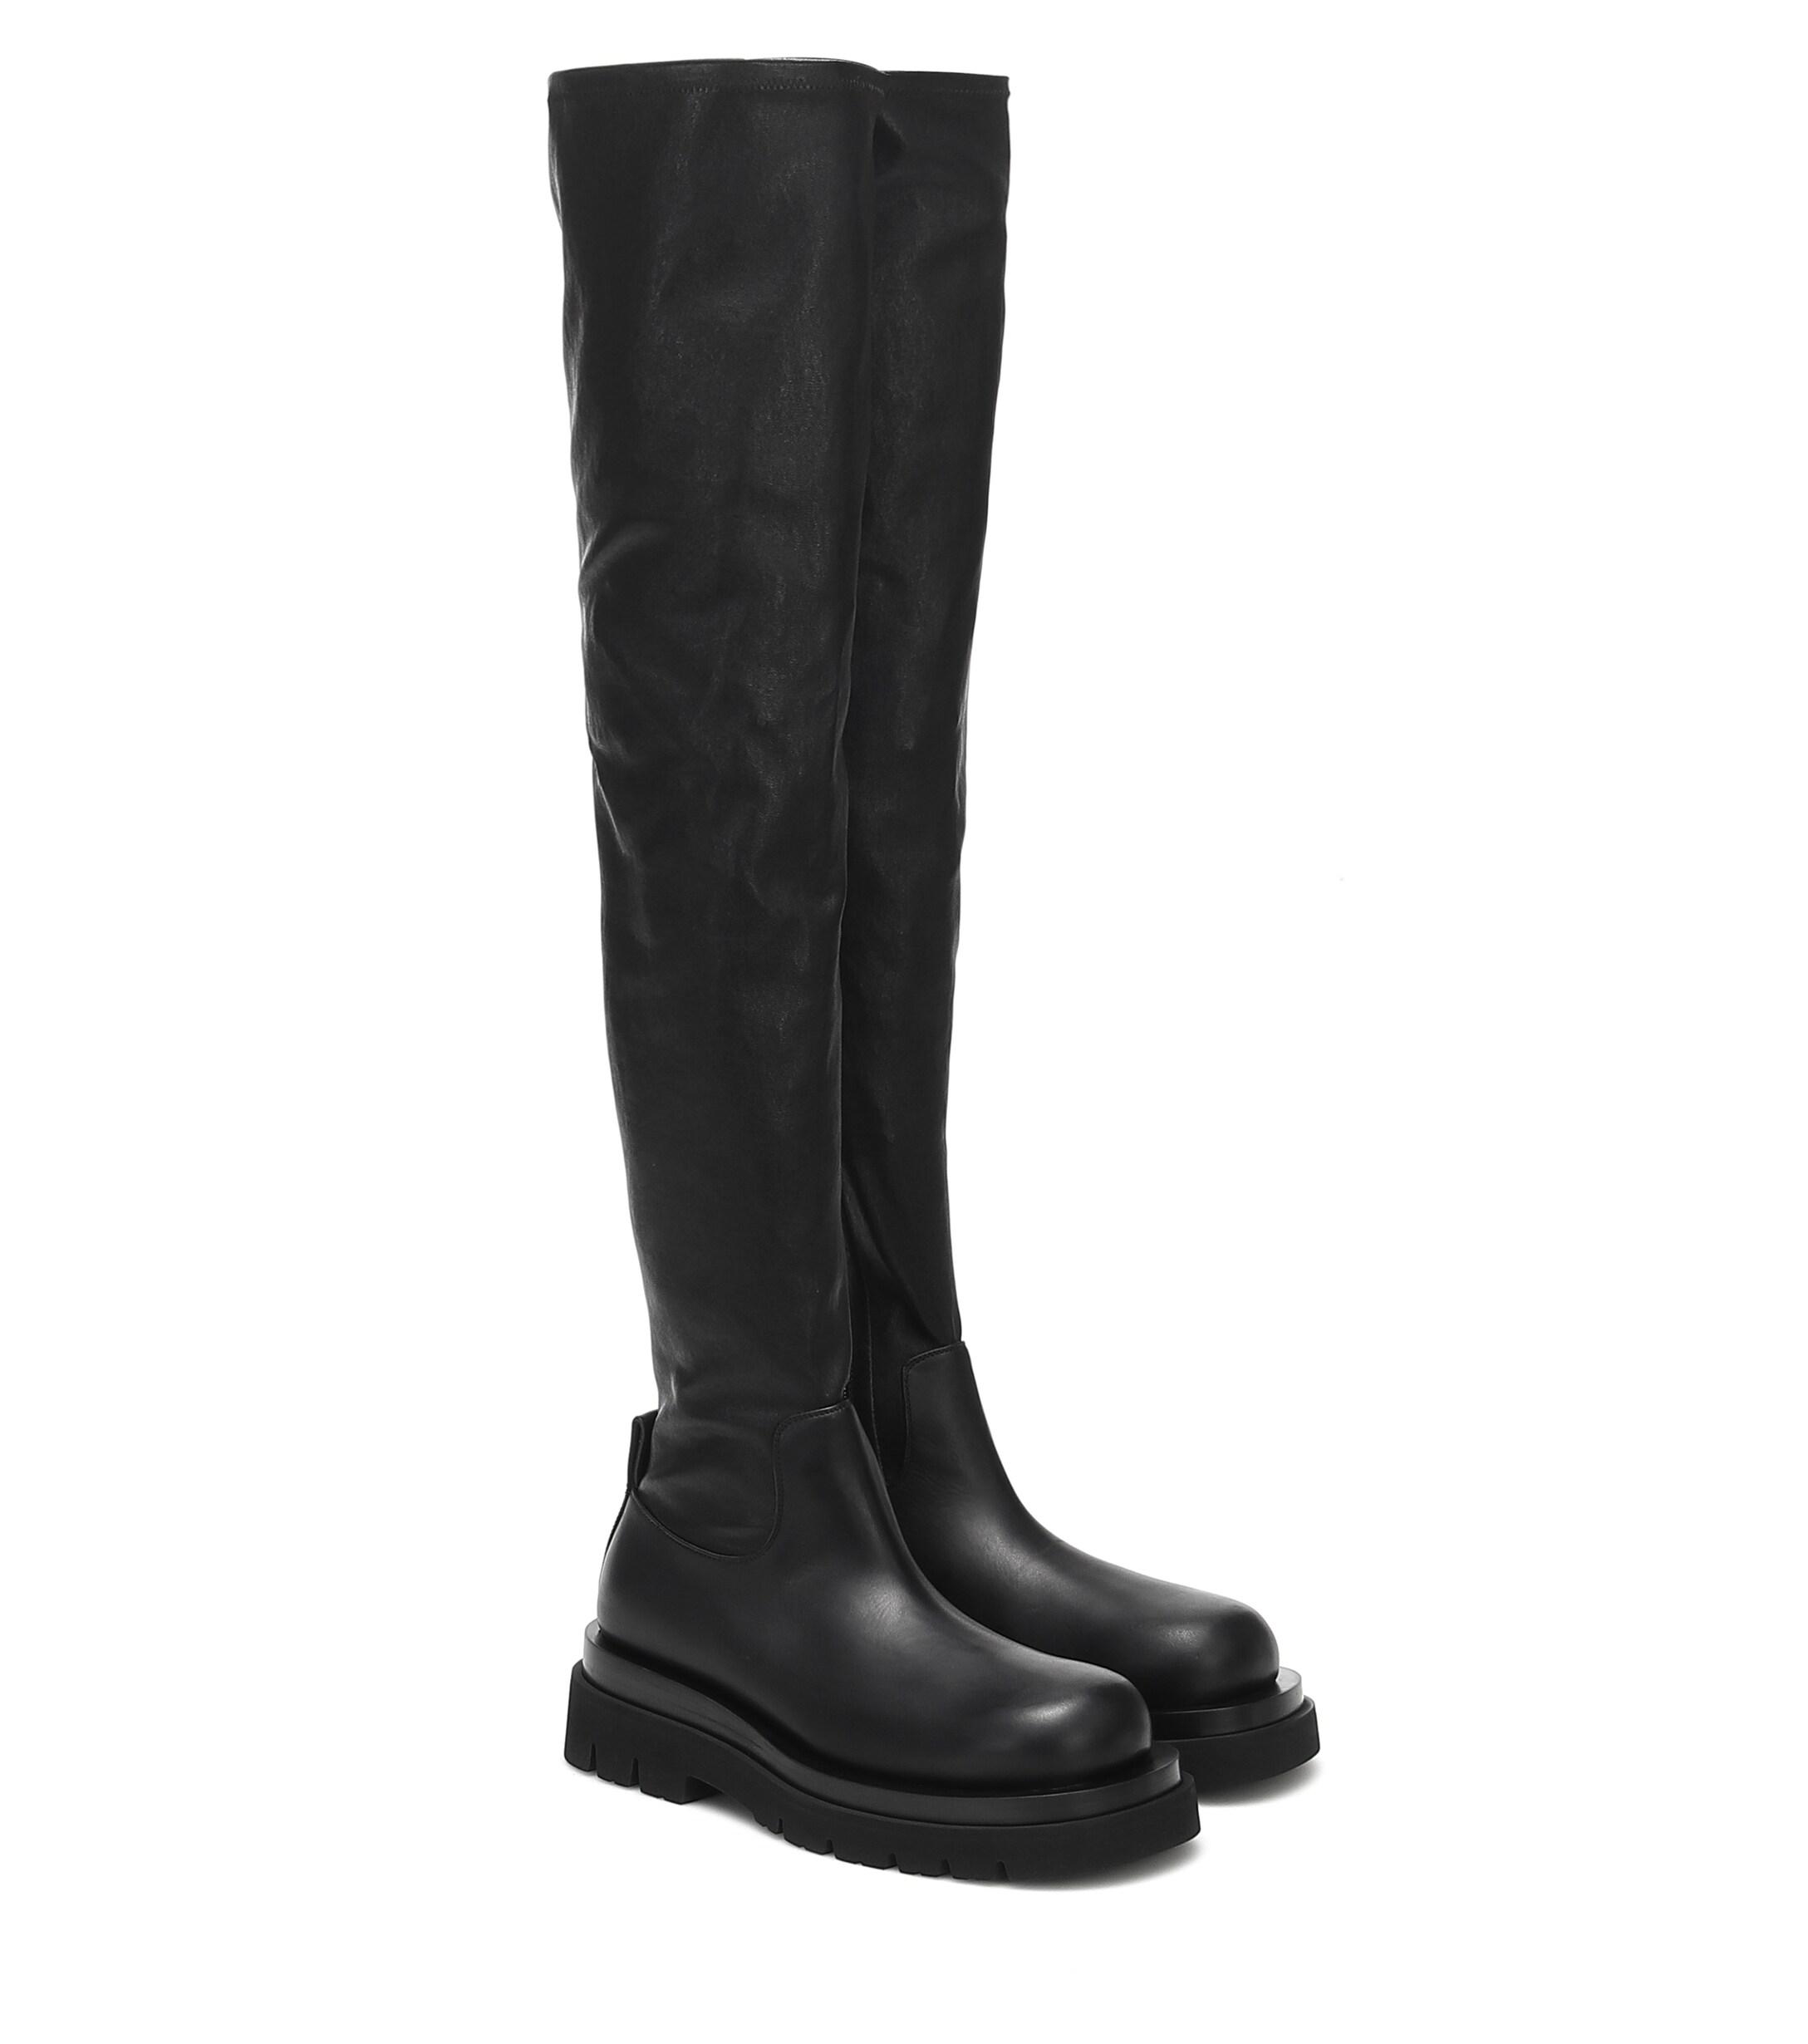 Bottega Veneta Leather Over-the-knee Boots in Black - Lyst